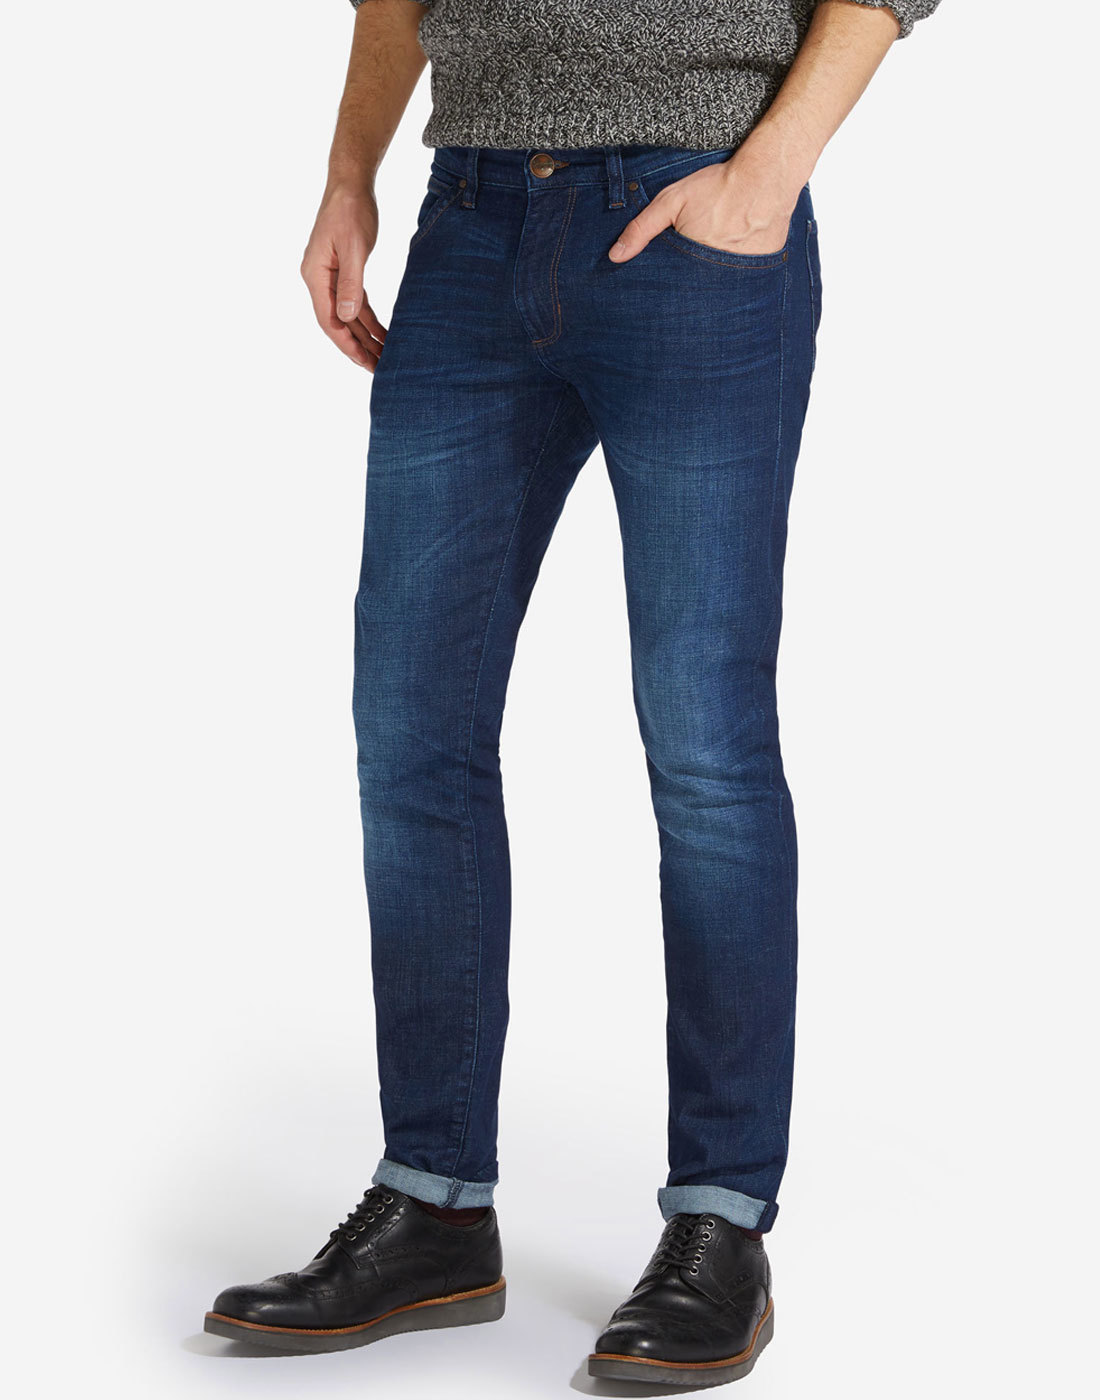 wrangler jeans skinny mens